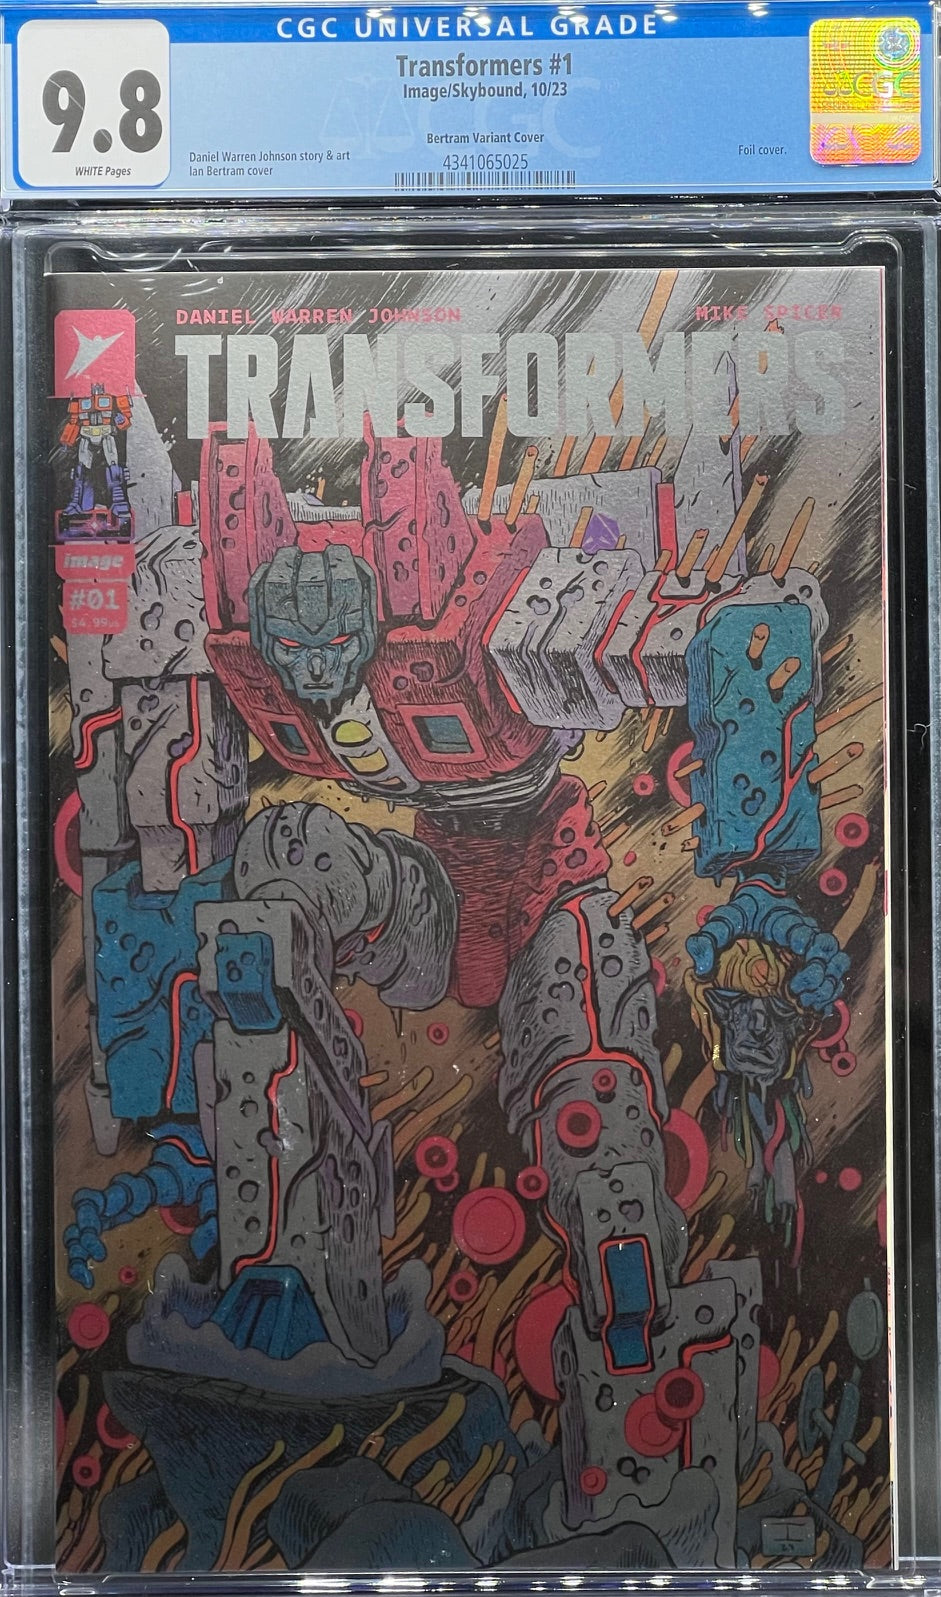 Transformers #1 Bertram Variant Cover CGC 9.8 Universal Grade